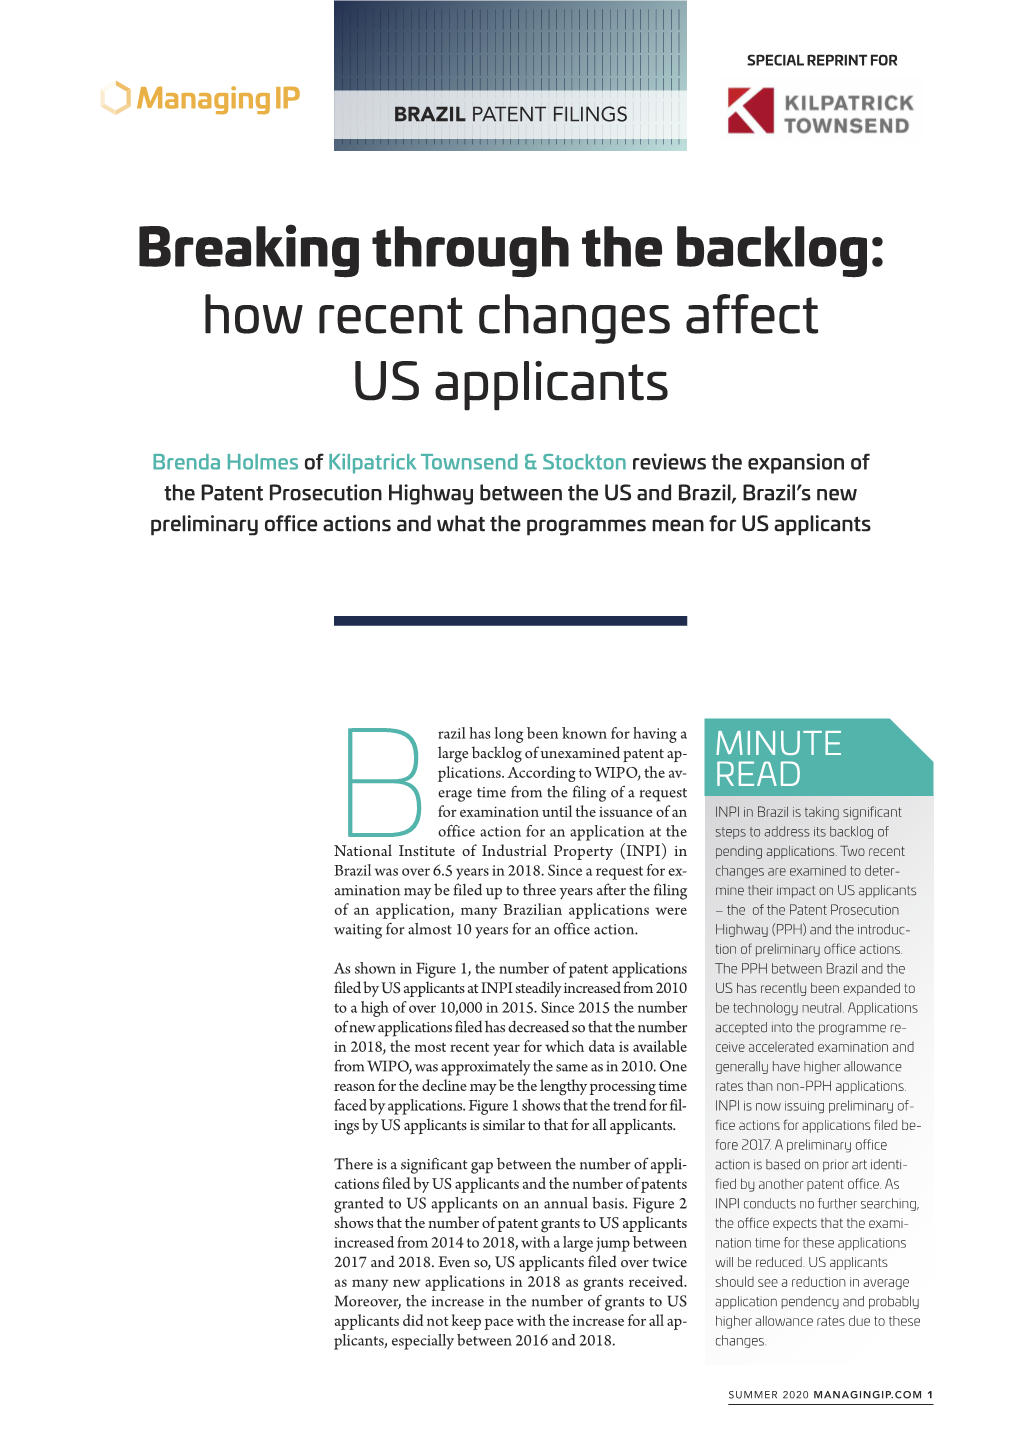 How Recent Changes Affect US Applicants